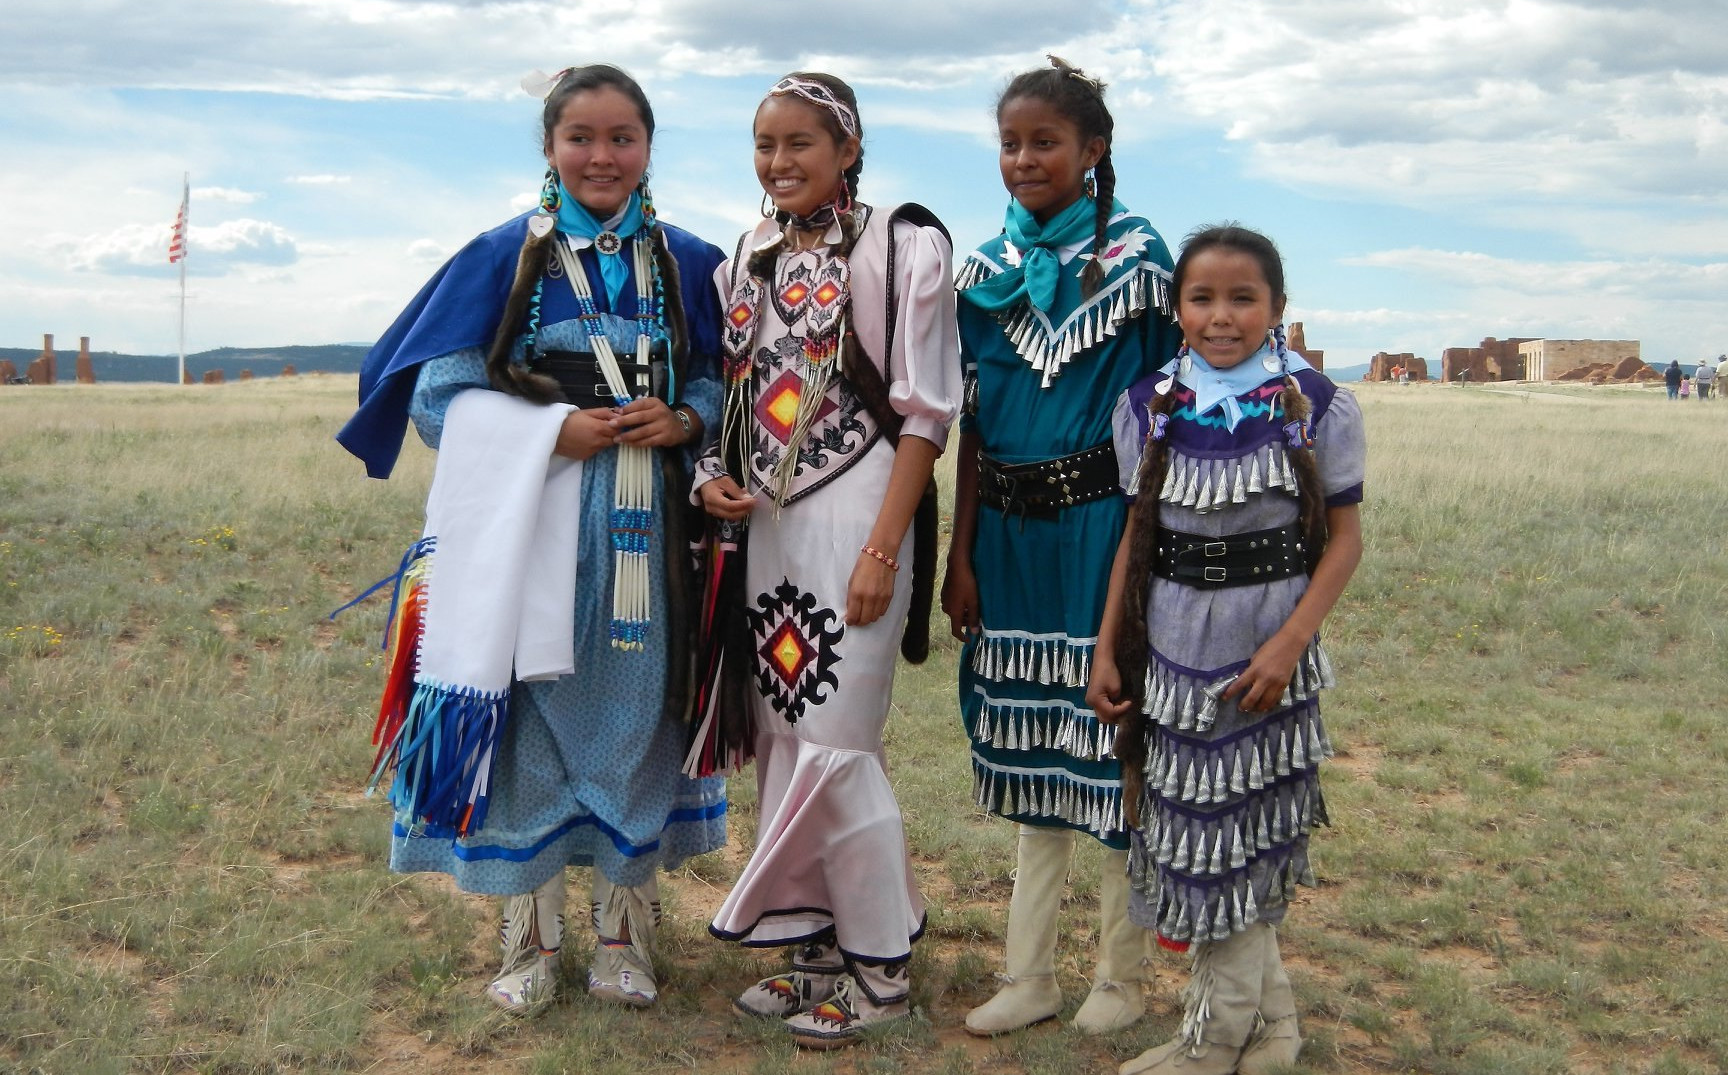 iowa native american indians